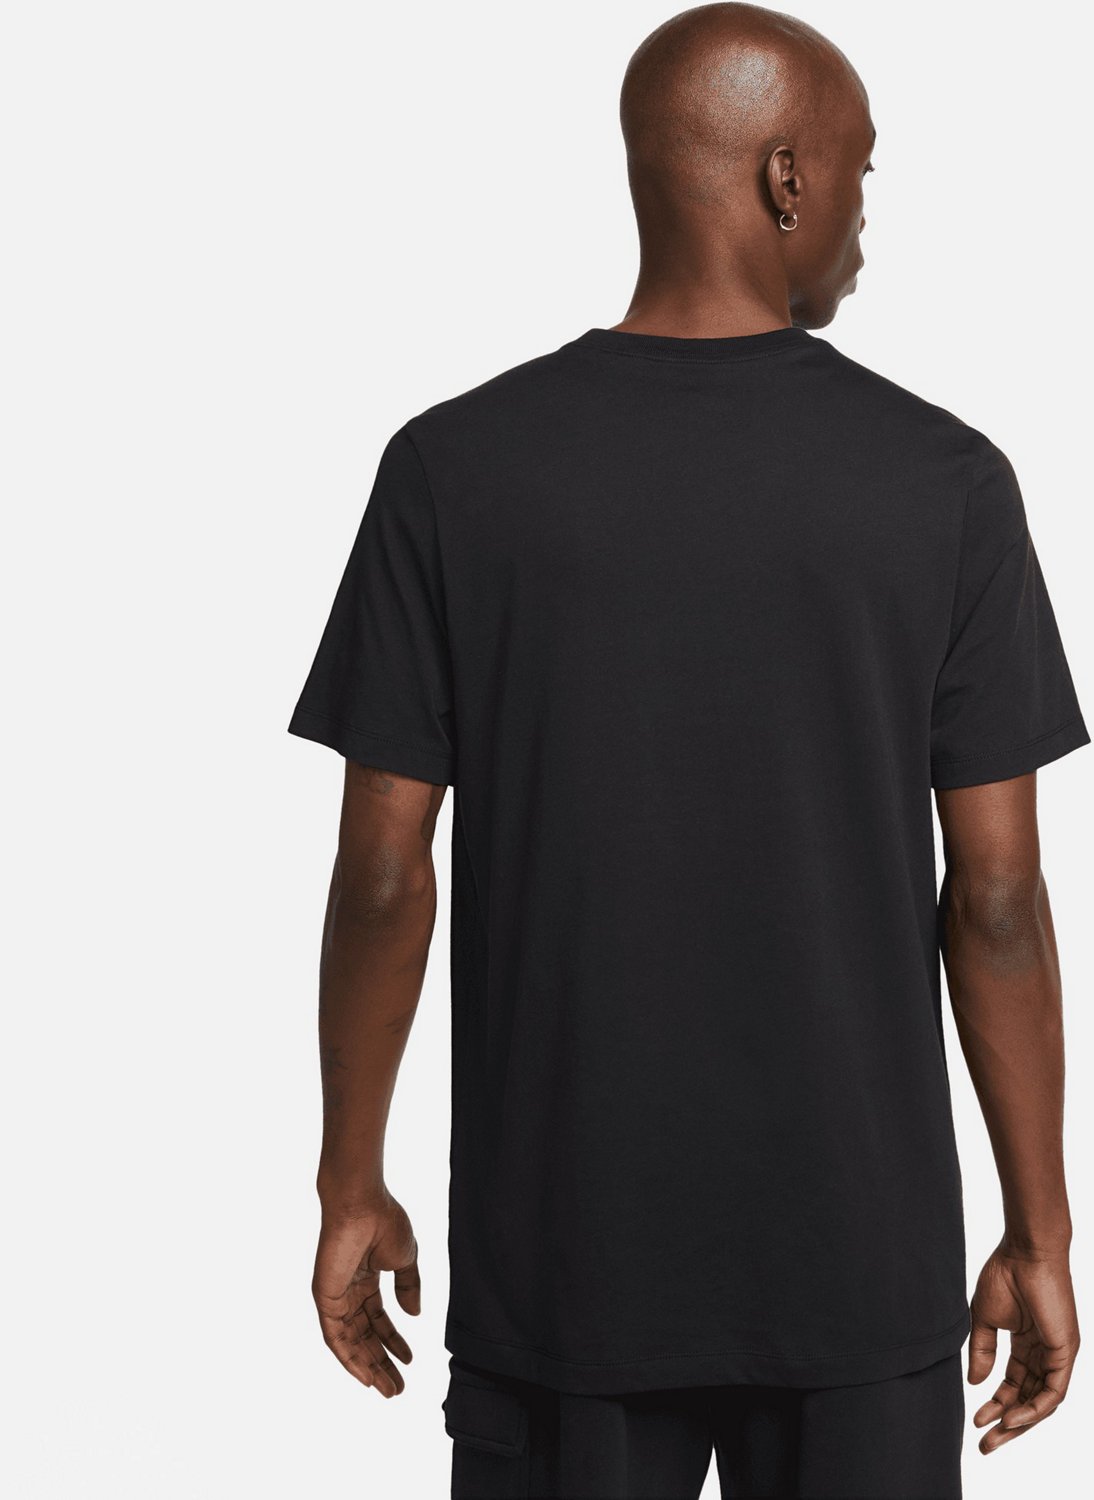 Swoosh Shipping Nike | Men\'s Free T-shirt at Academy